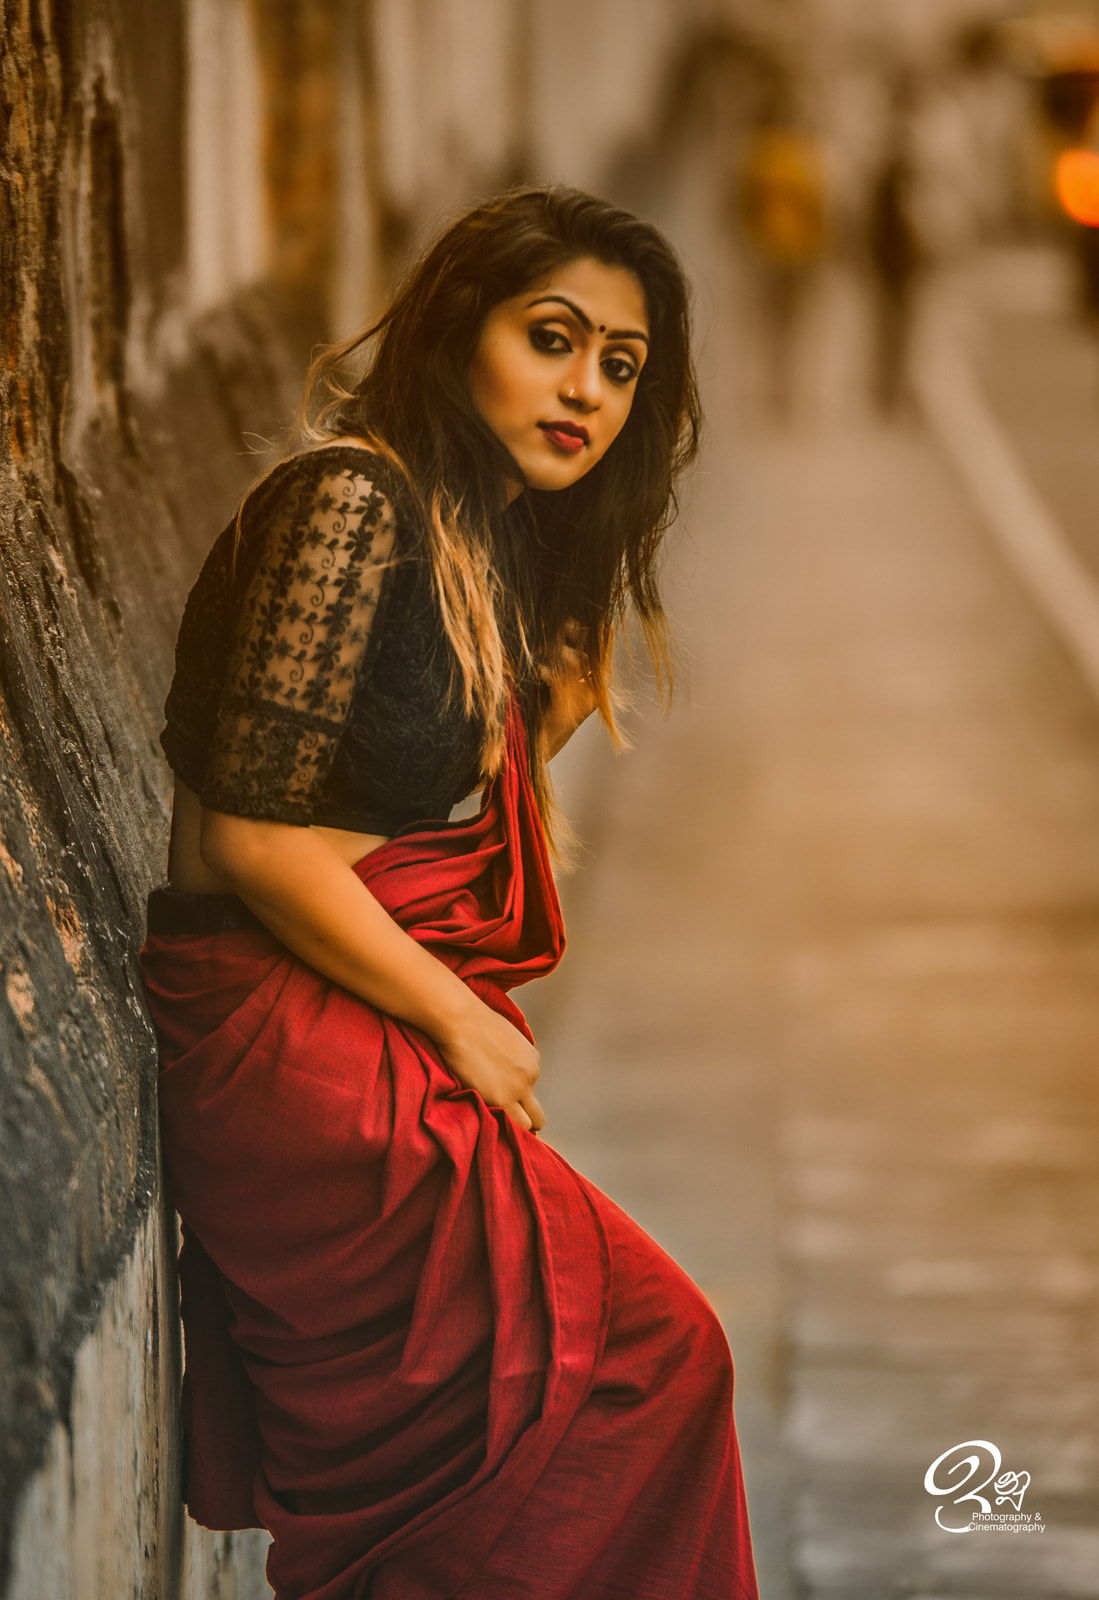 Kaushi Bandara model sexy lady indian style hot red saree